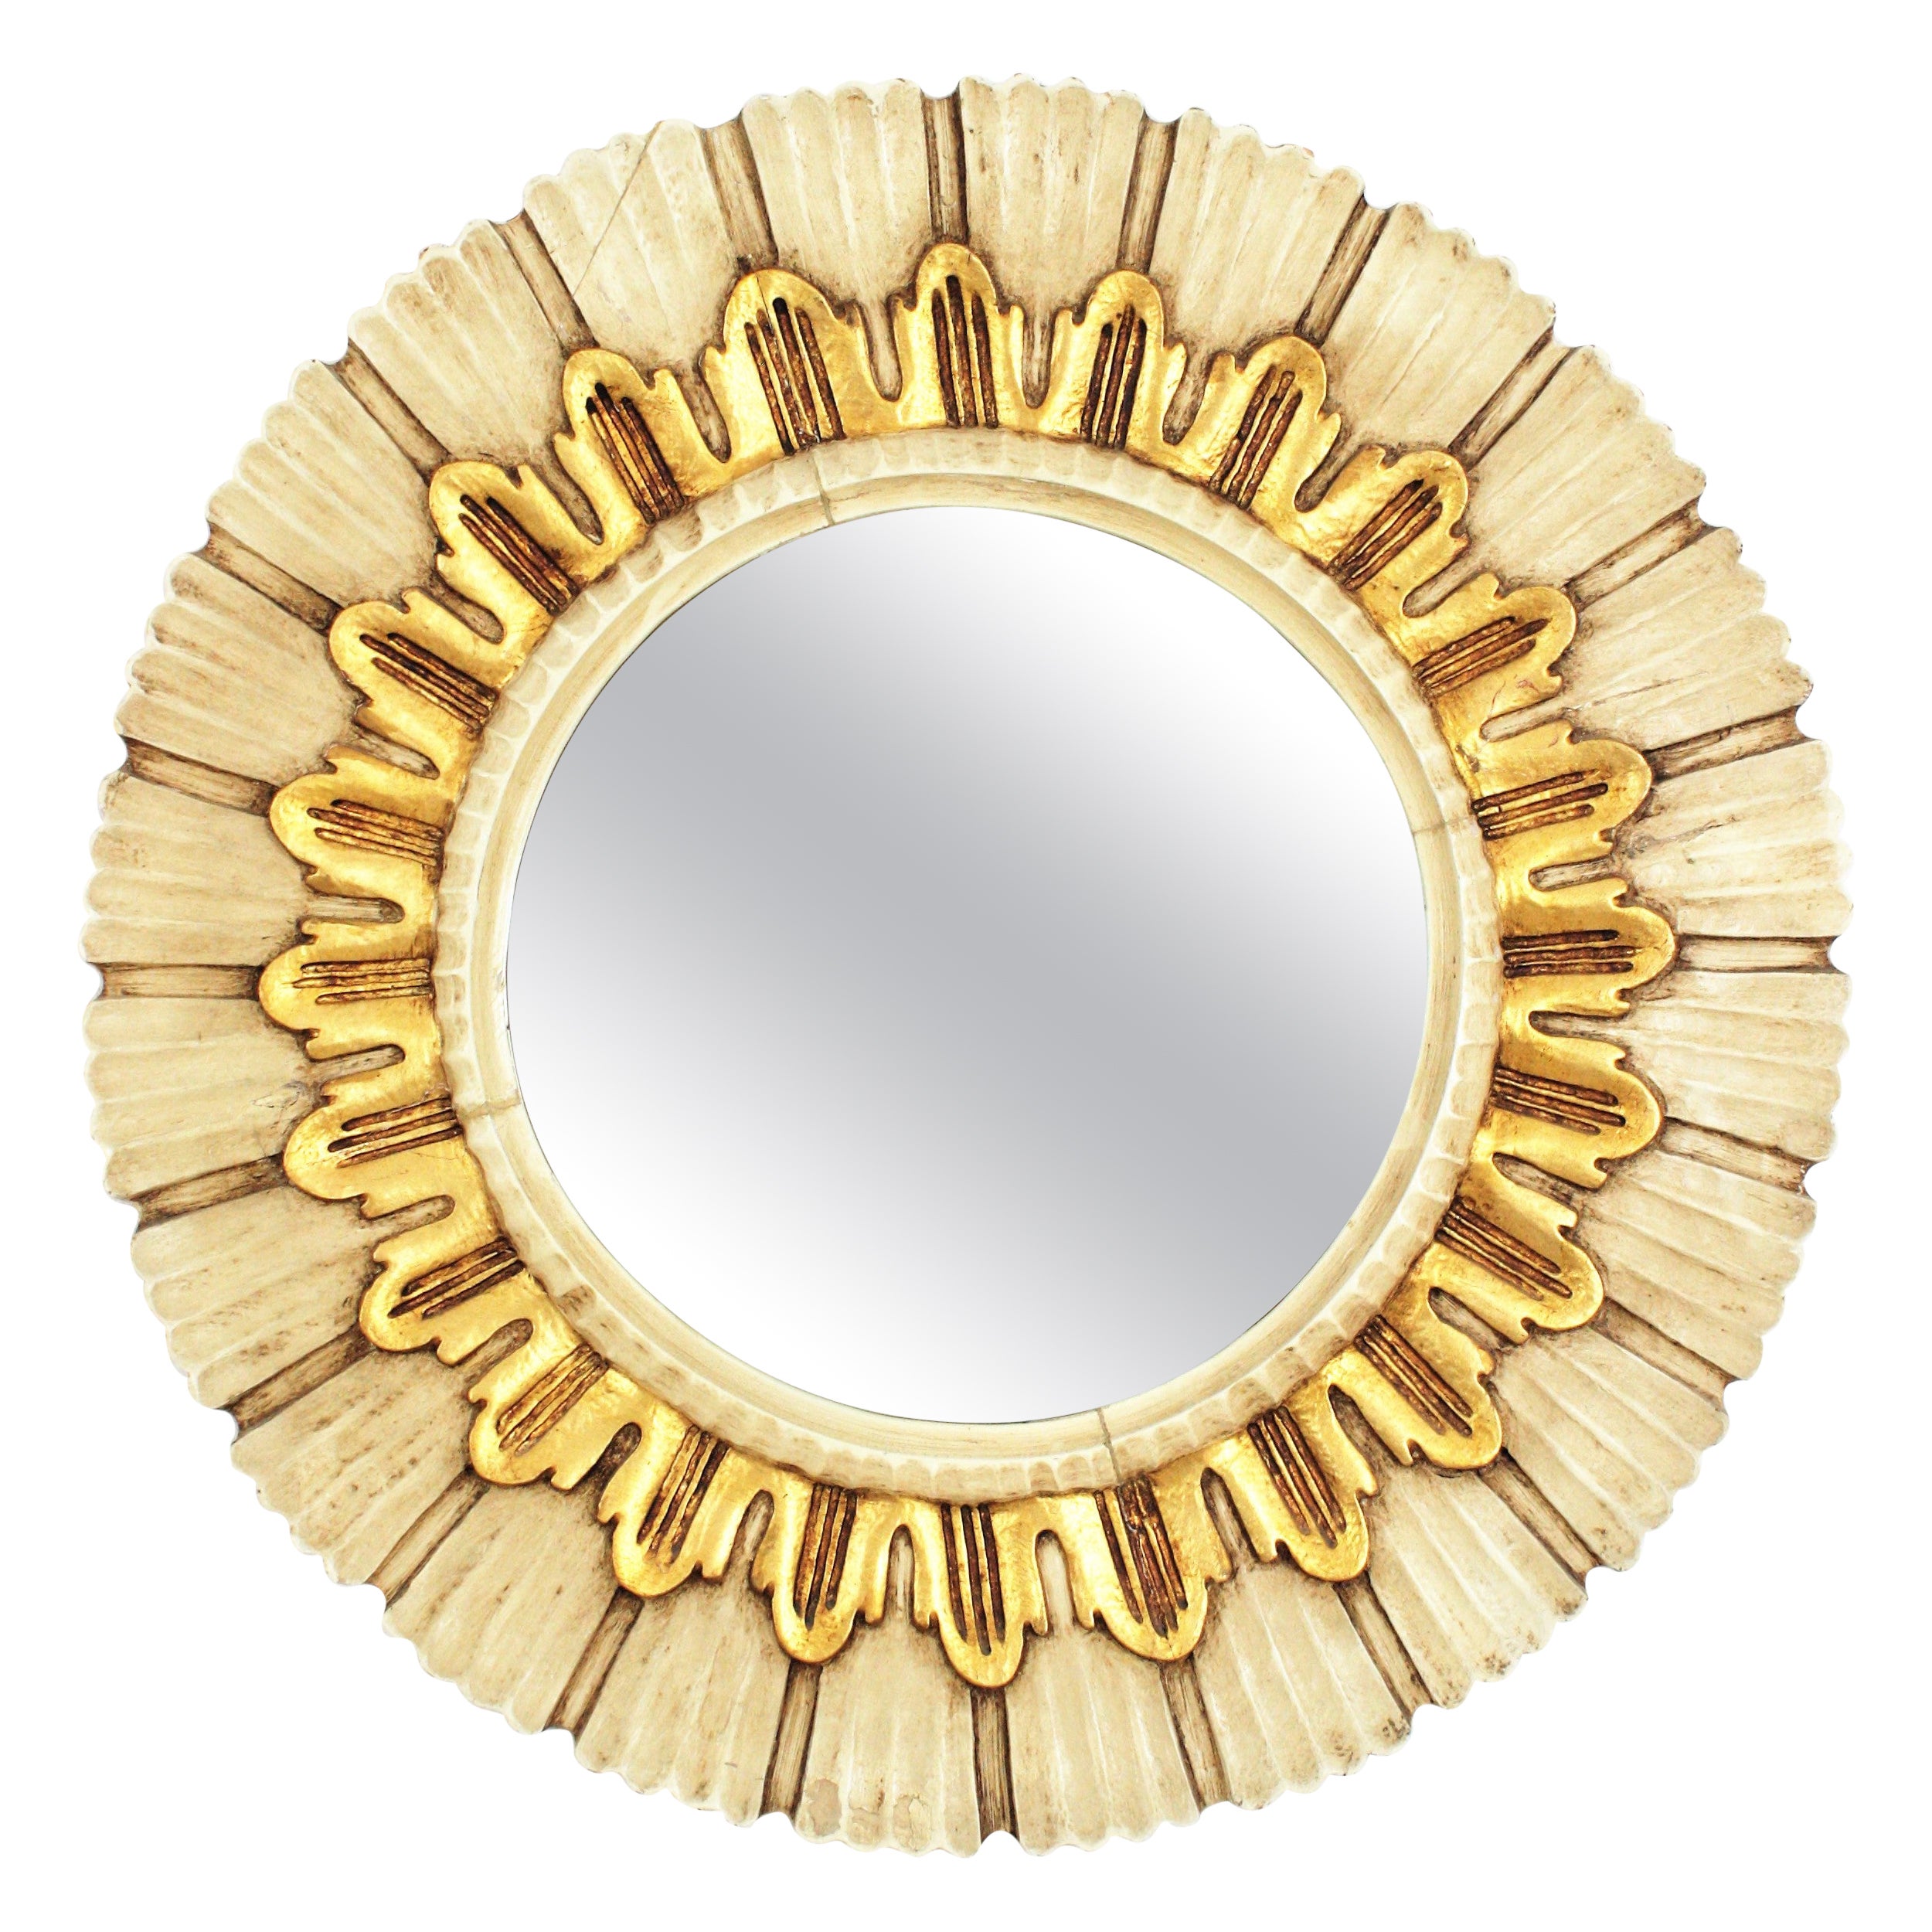 Spanish Sunburst Round Wall Mirror in Beige and Gold Giltwood